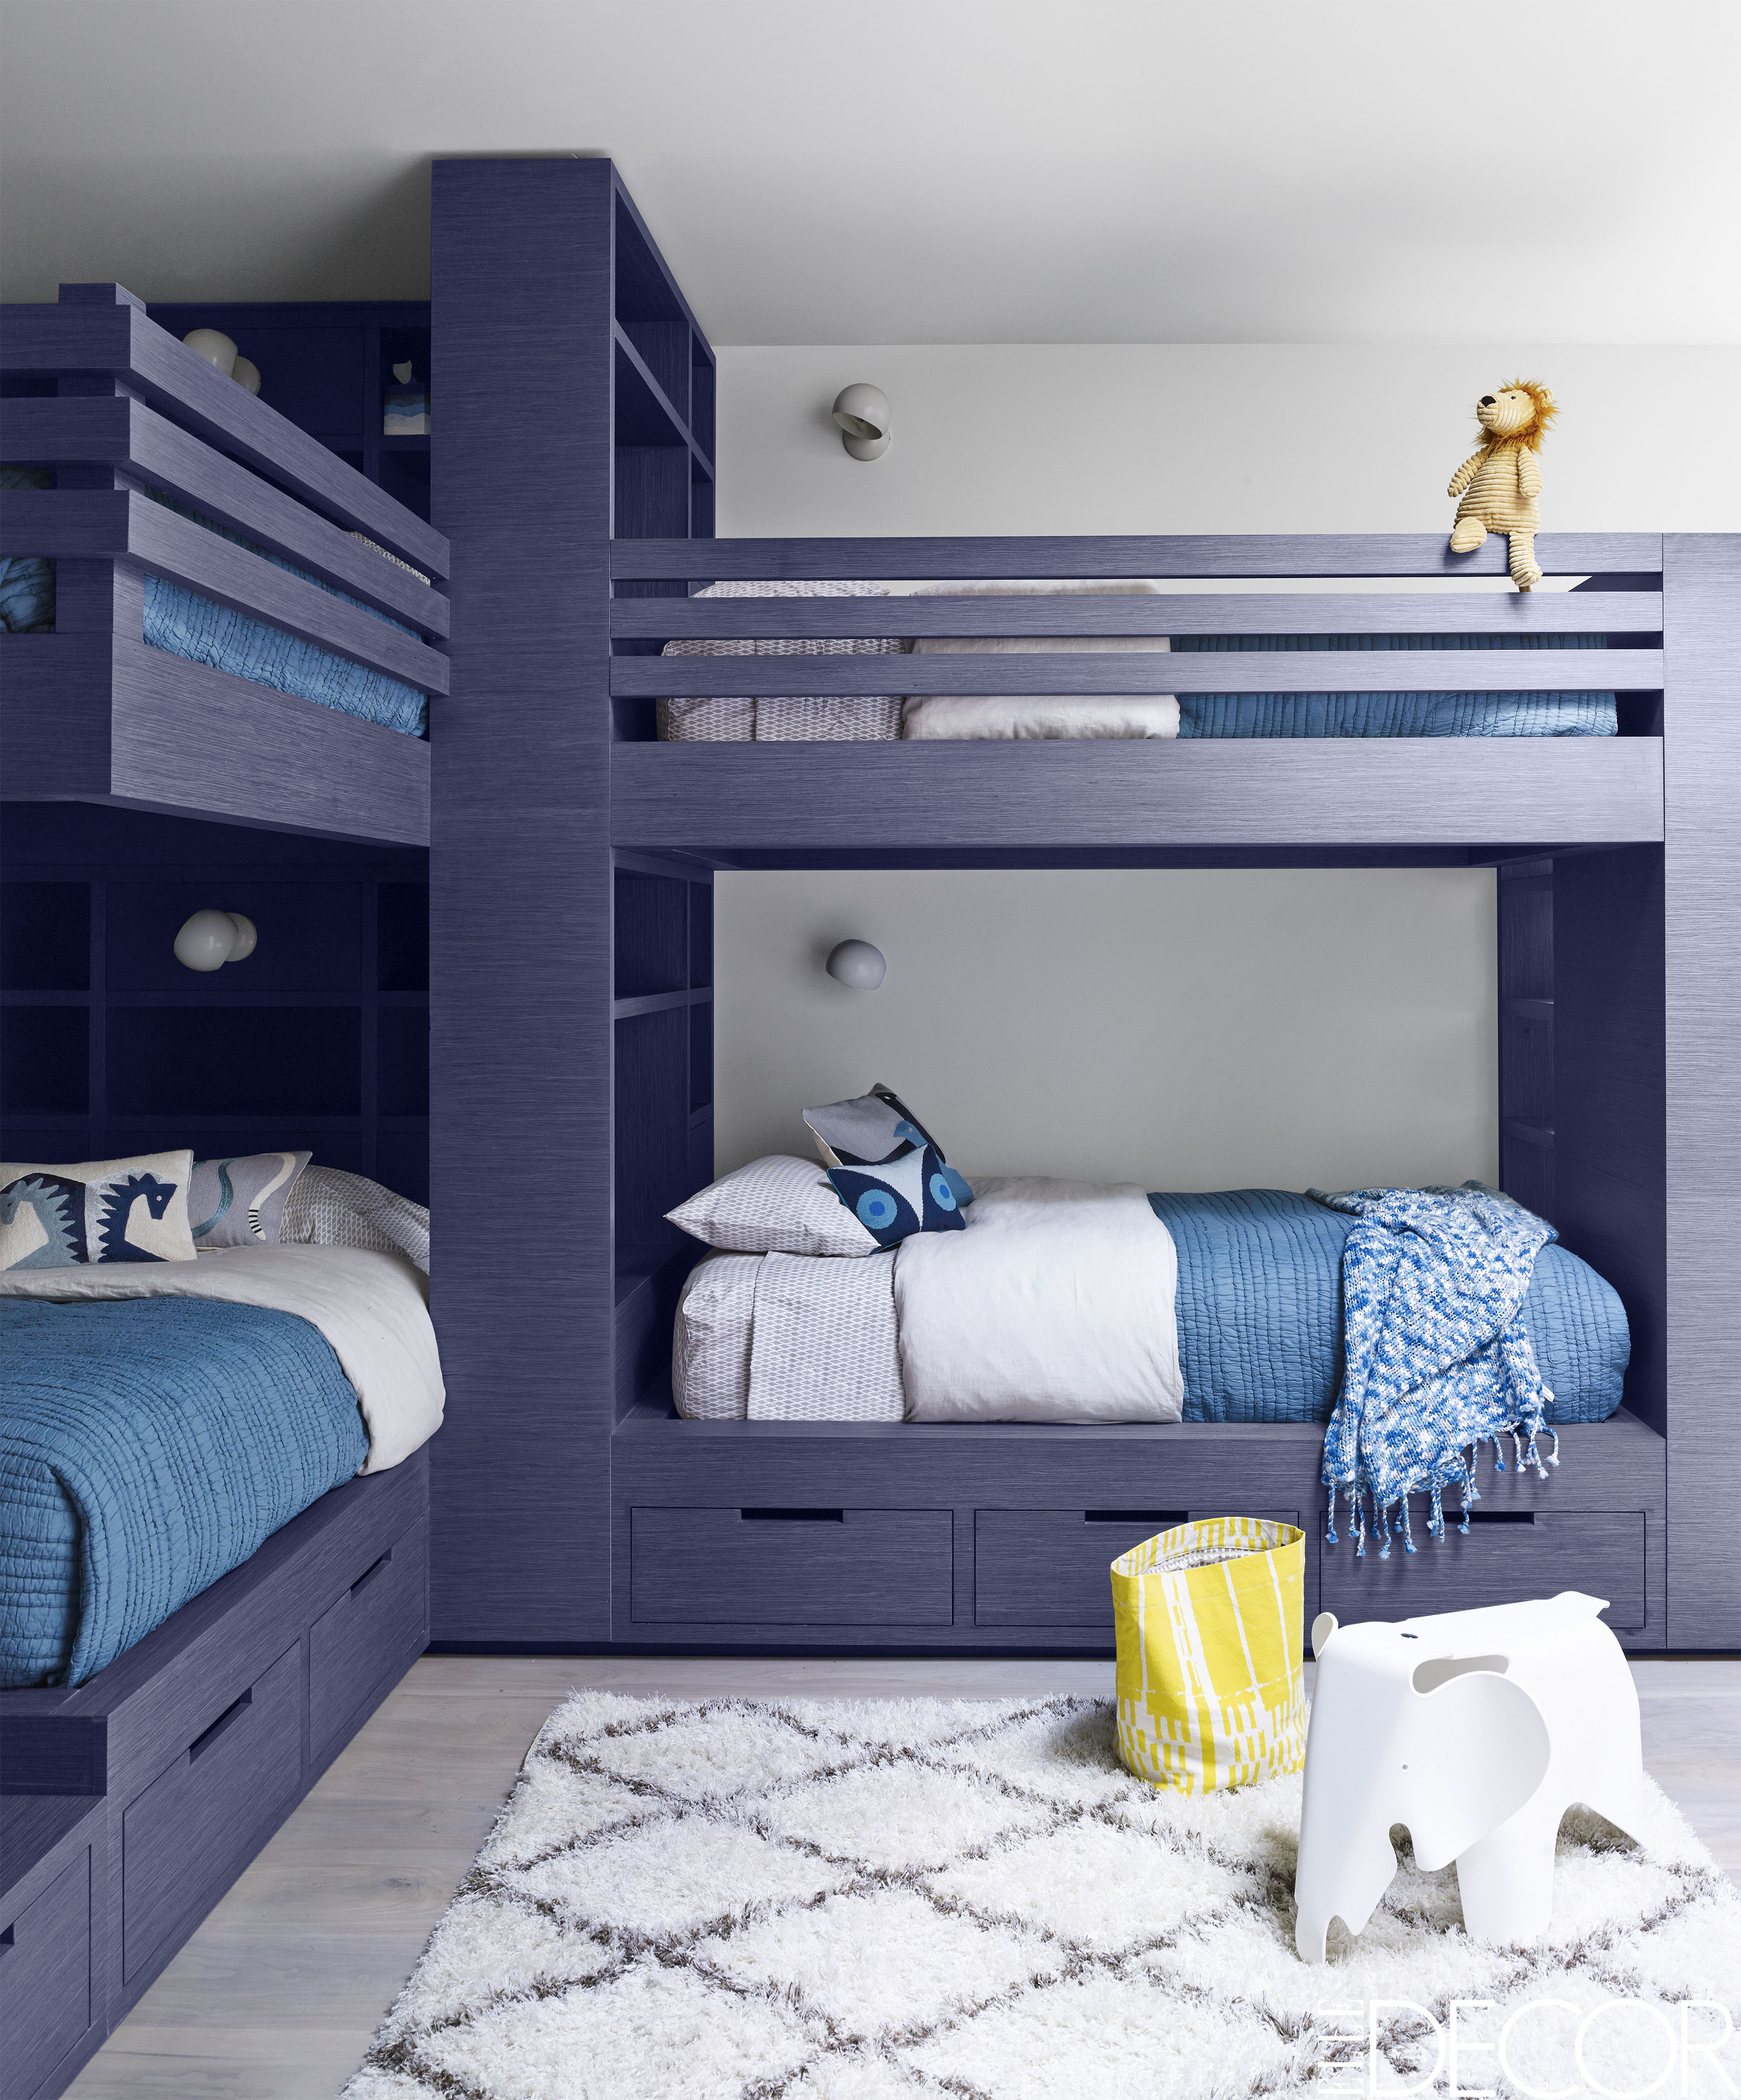 15 cool boys bedroom ideas - decorating a little boy room YYJMBOQ